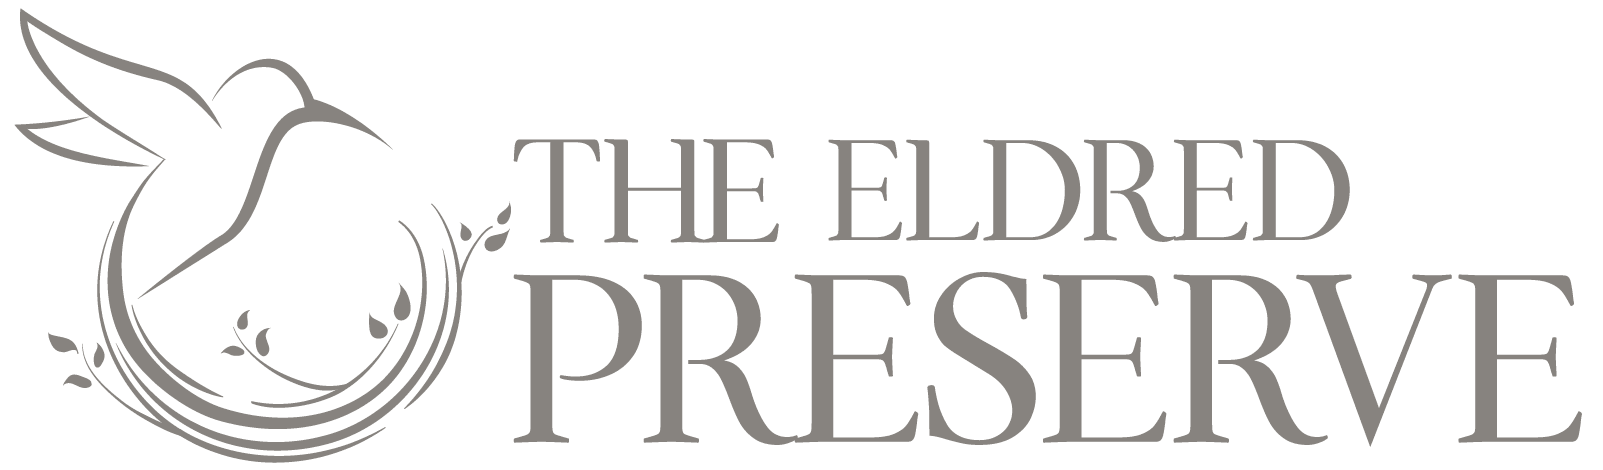 The Eldred Preserve